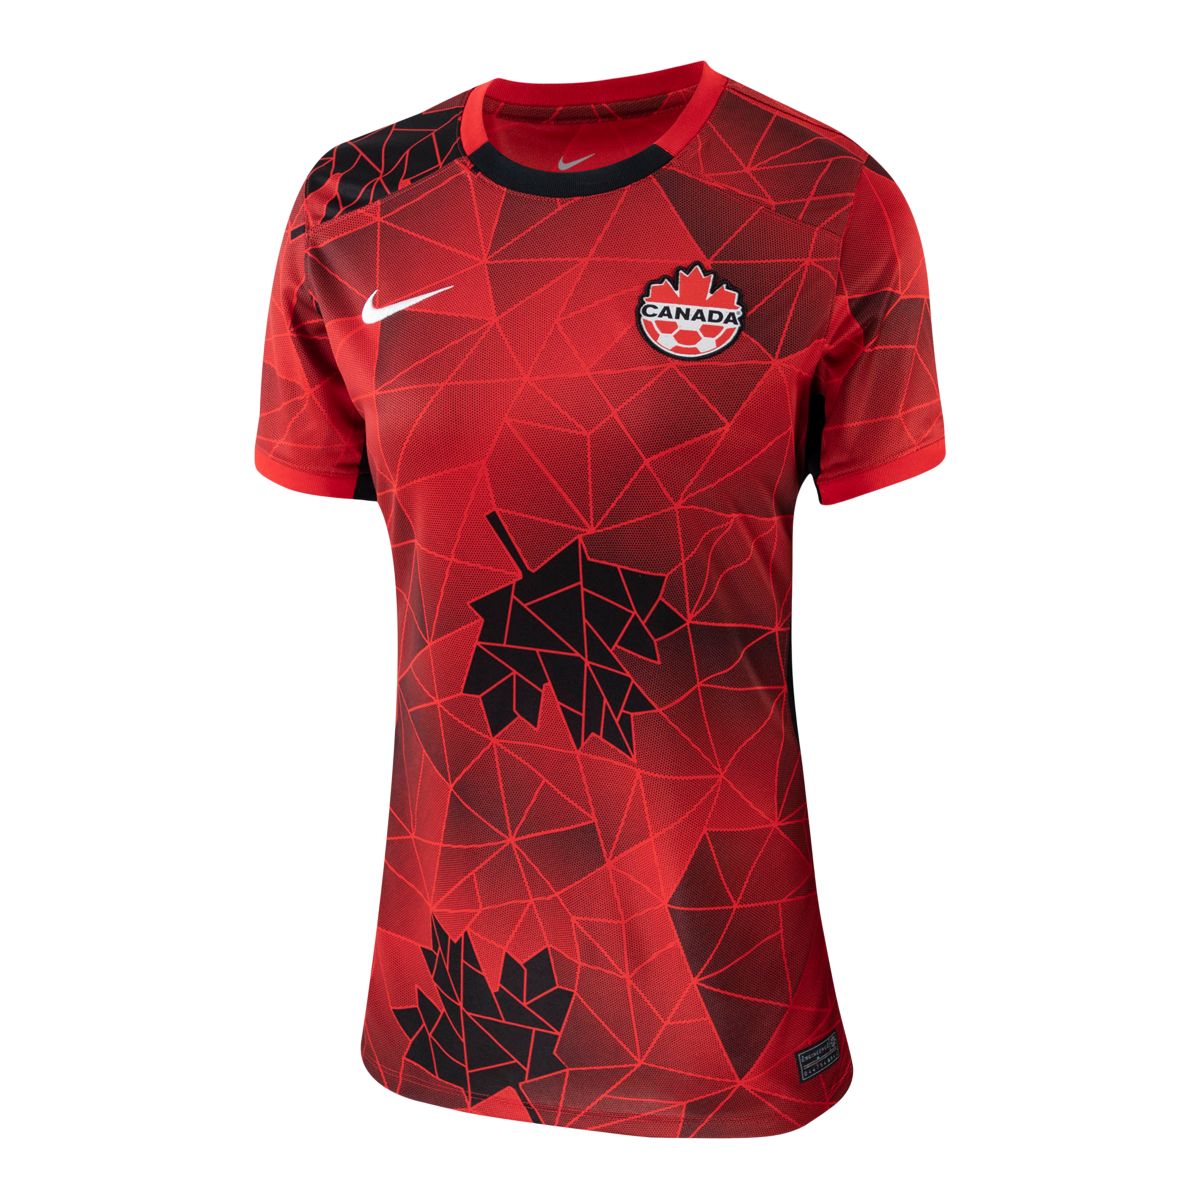 Image of Canada Nike Women's Soccer Replica Jersey